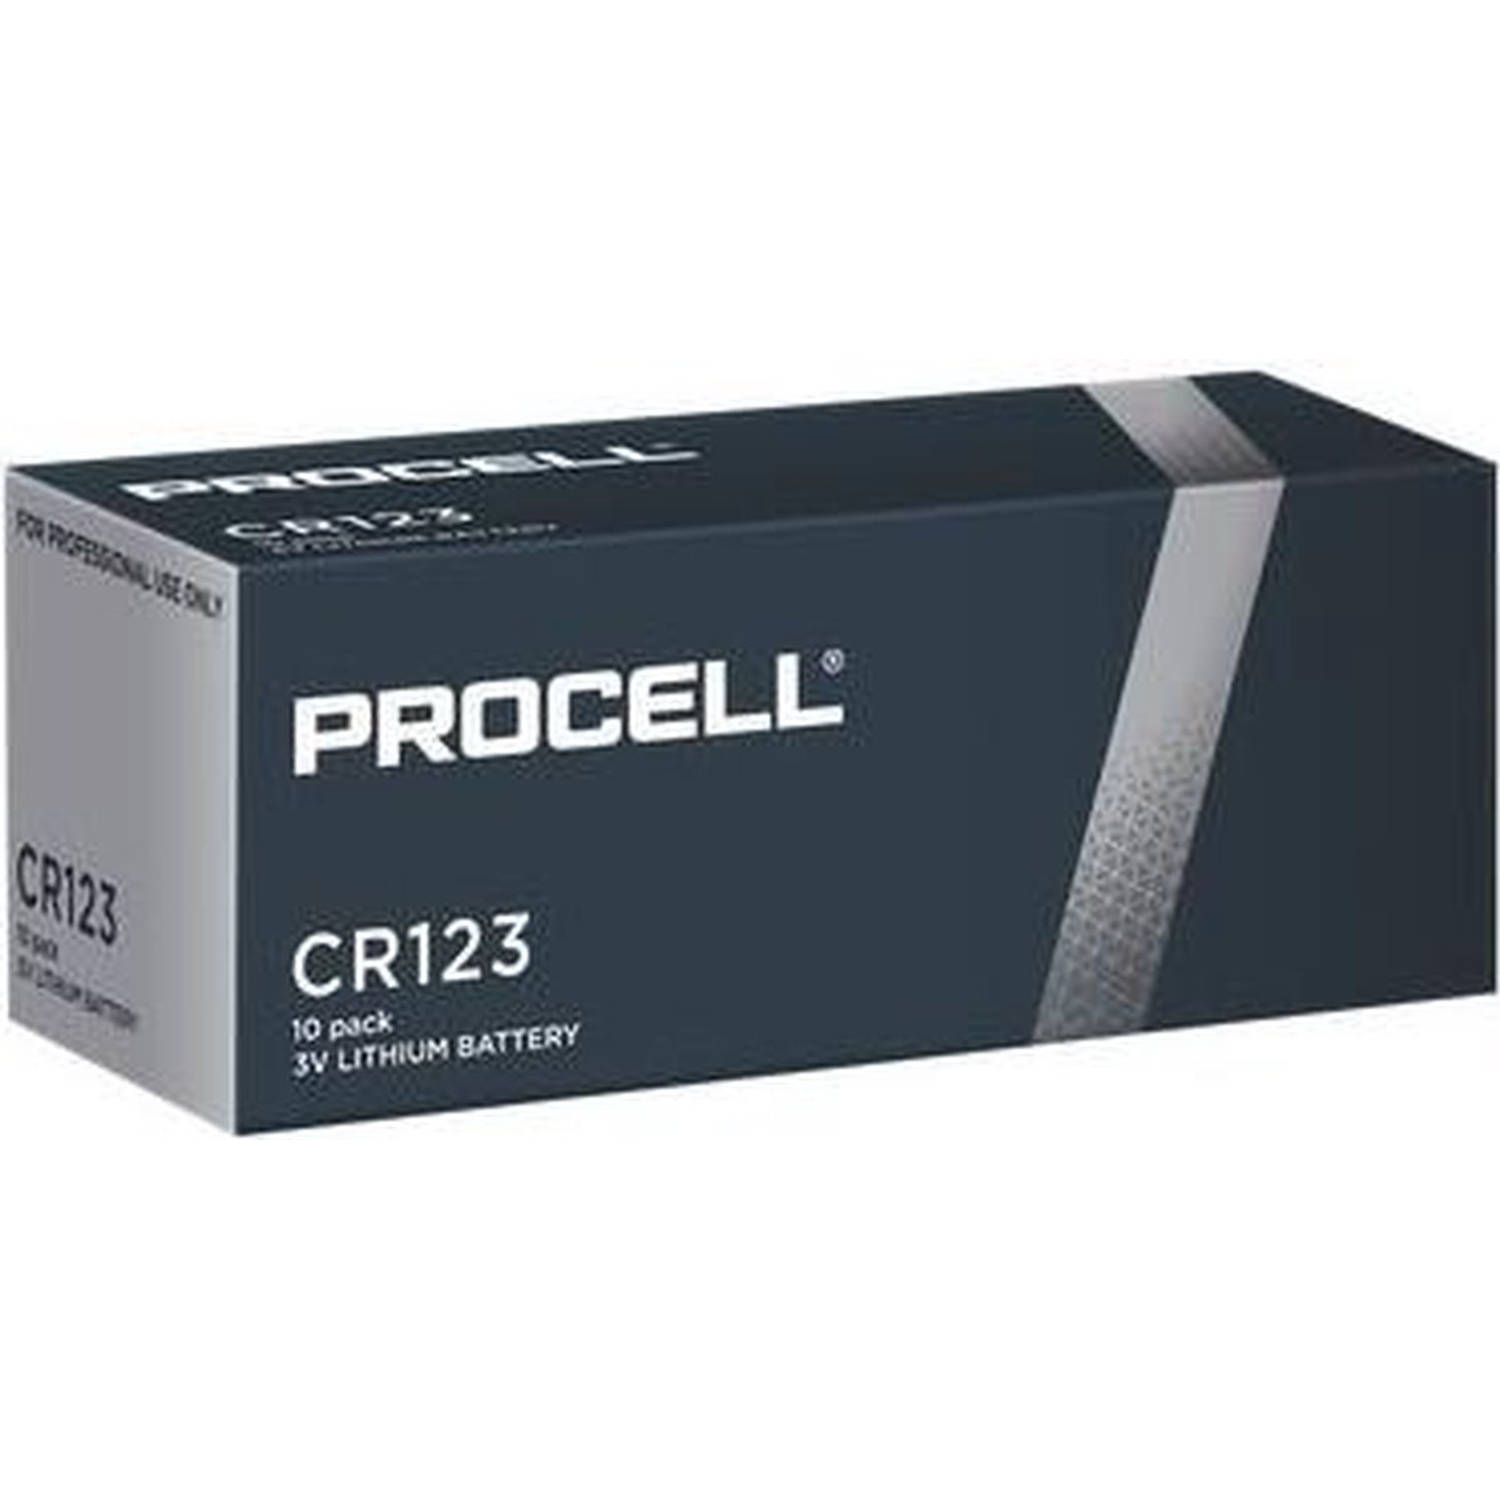 Procell Lithium CR123 3V 10 pack